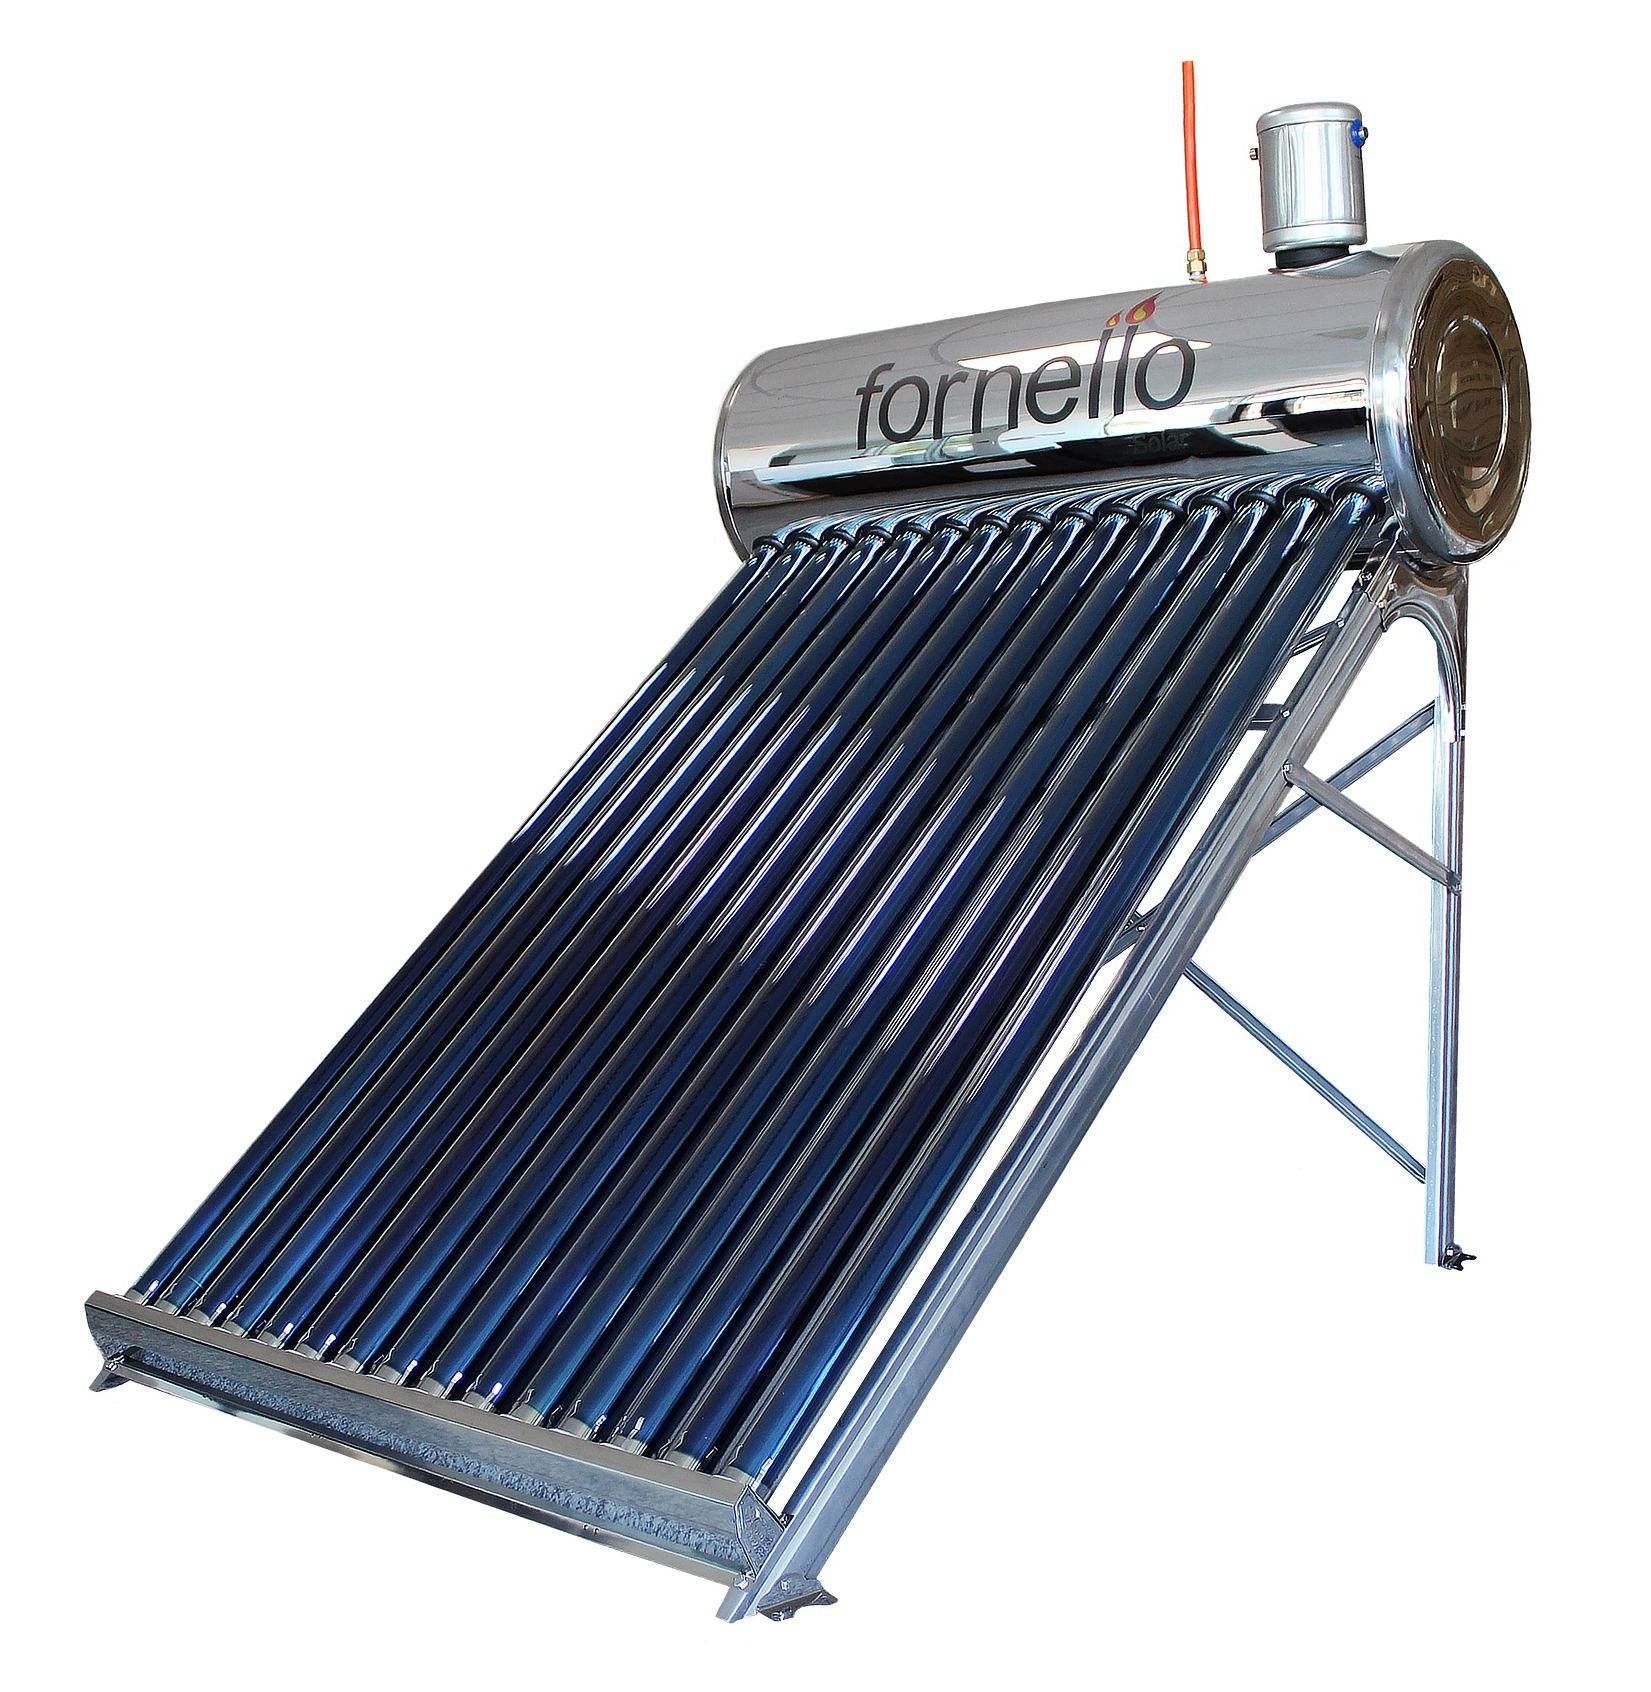 Panou solar nepresurizat Fornello pentru producere apa calda, cu rezervor inox 150 litri si 18 tuburi vidate Fornello